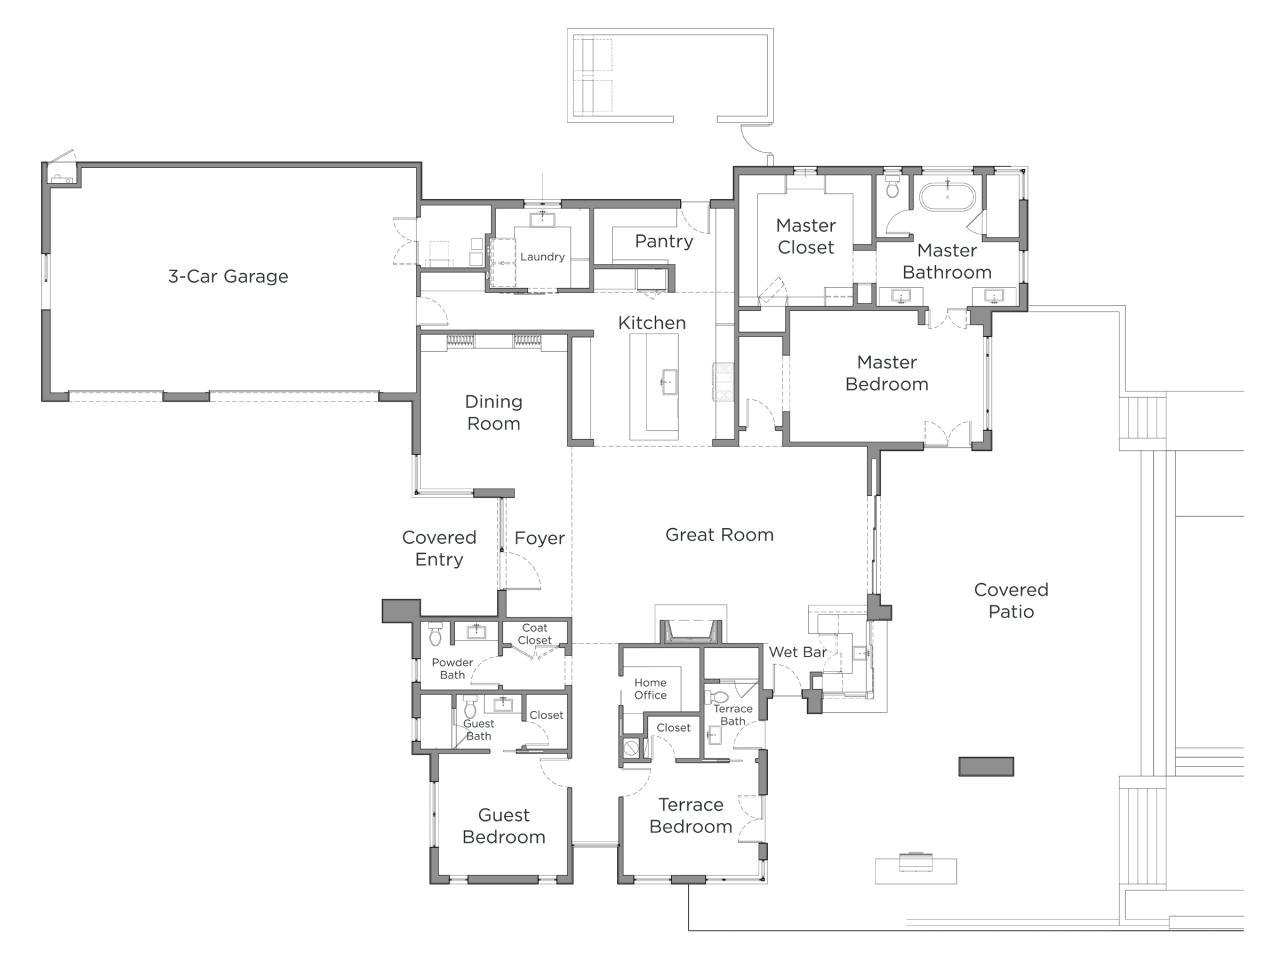 Hgtv Dream Home14 Floor Plan Hgtv Dream Home Floor Plan 2016